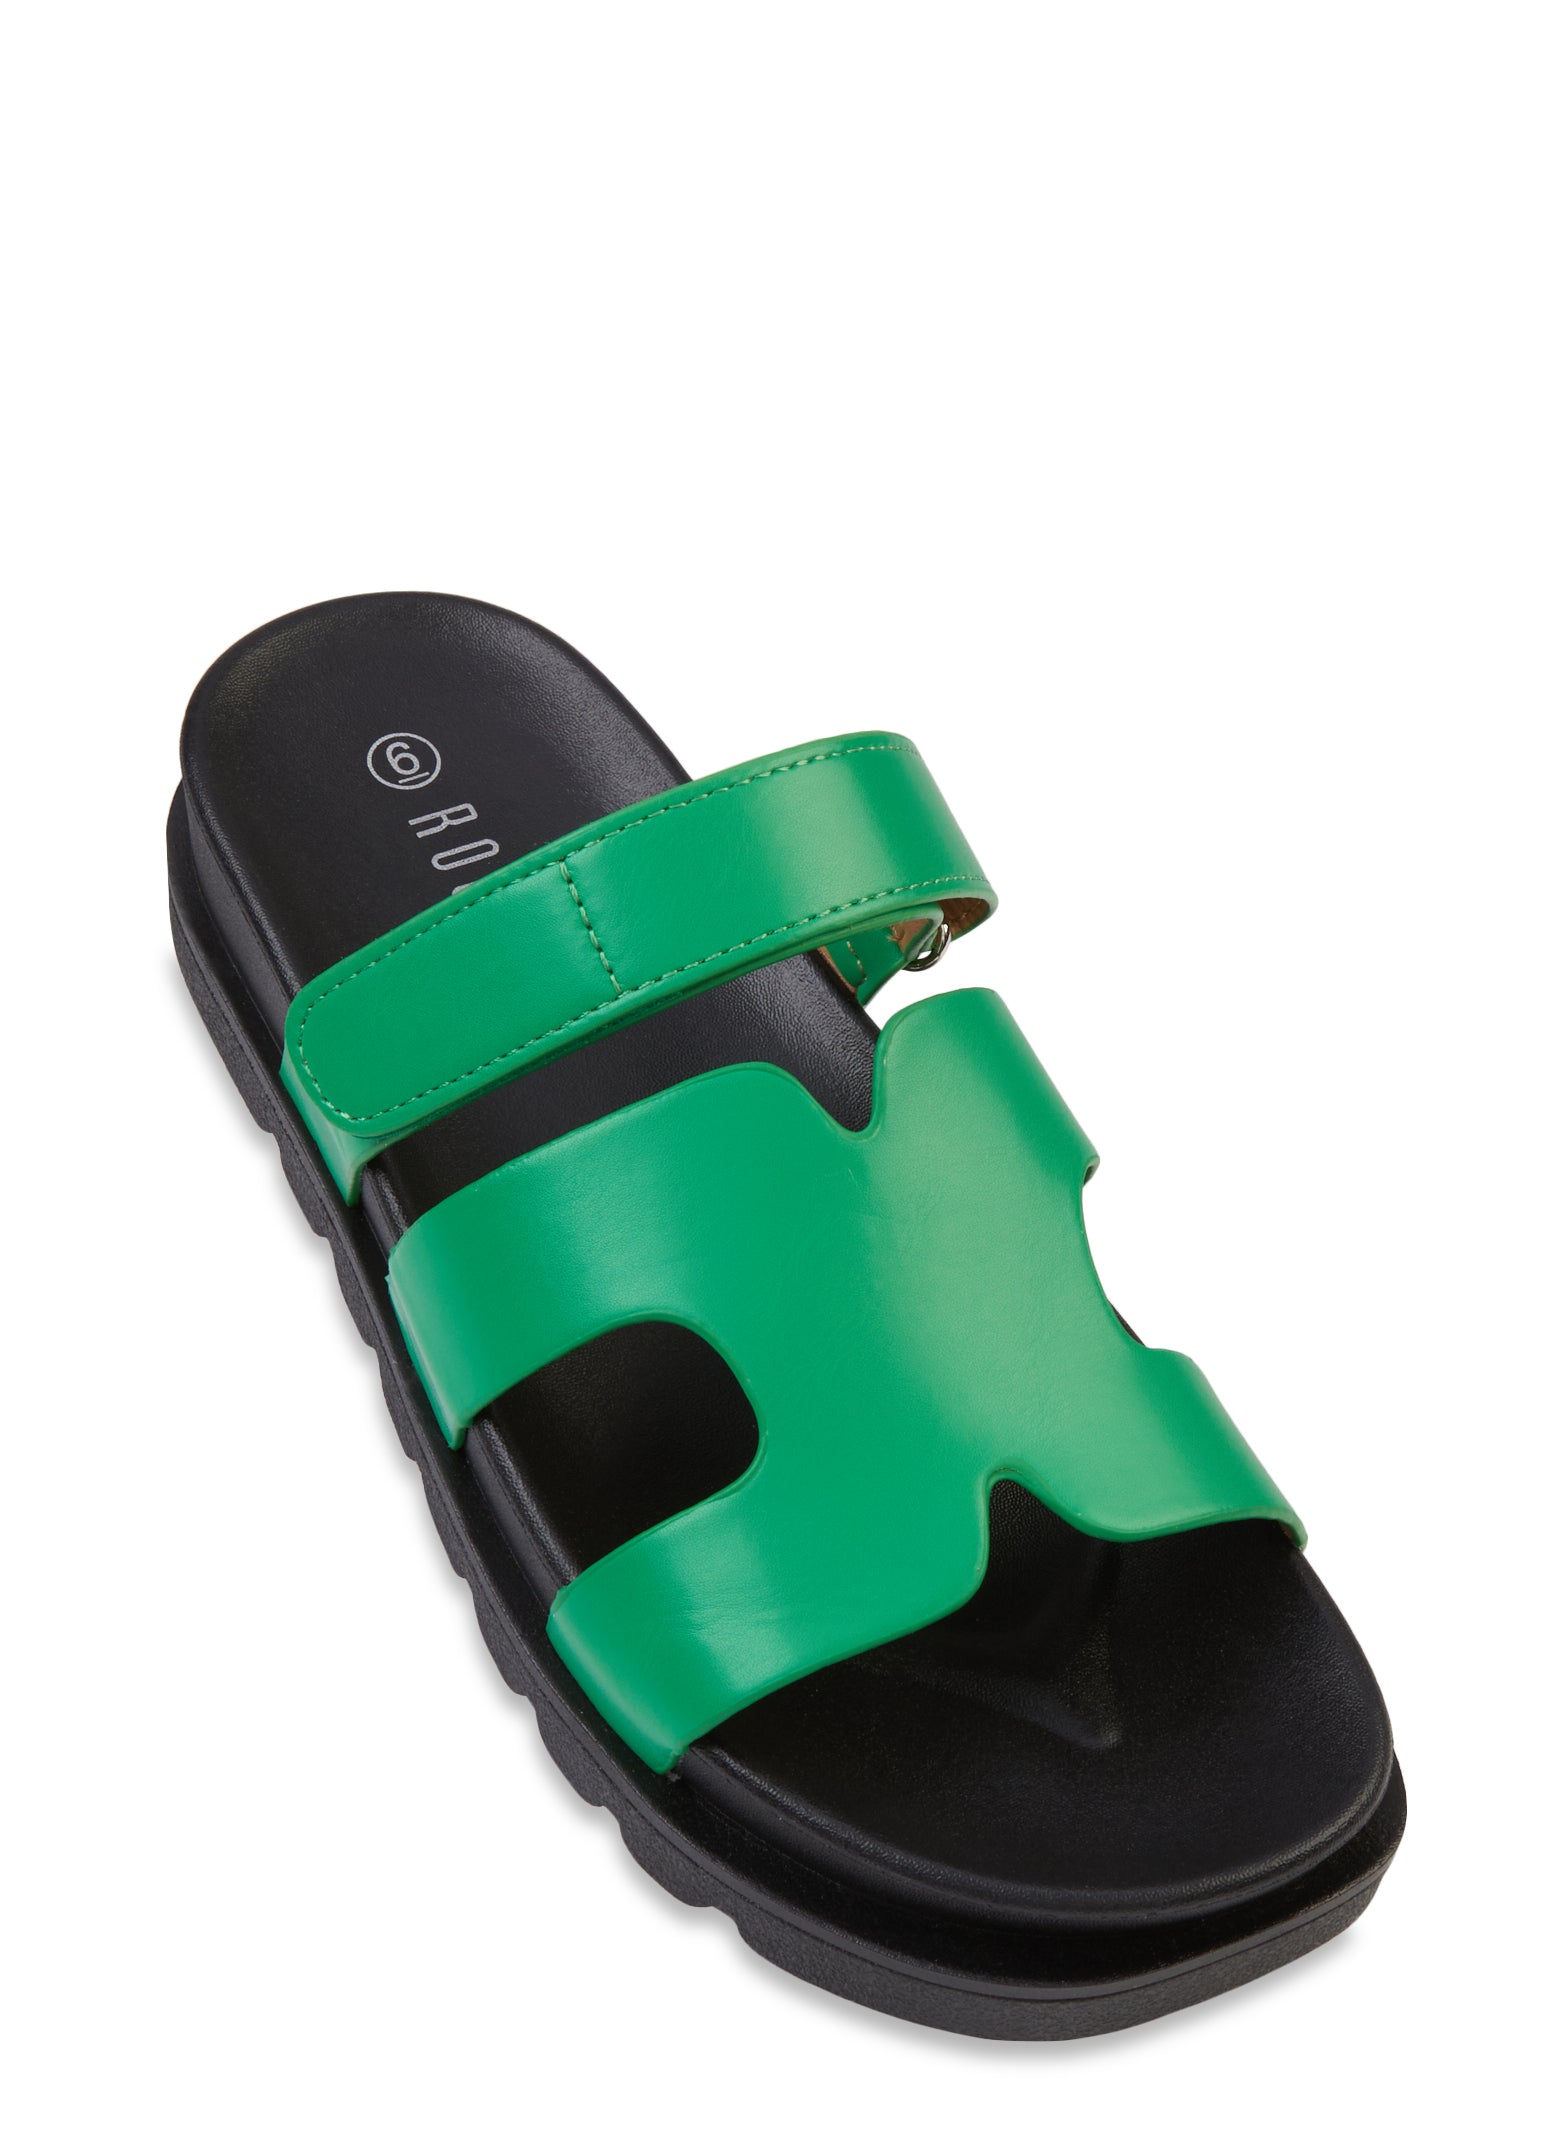 Hermes Rouge H Oran Sandals - Size 5. Only worn a... - Depop